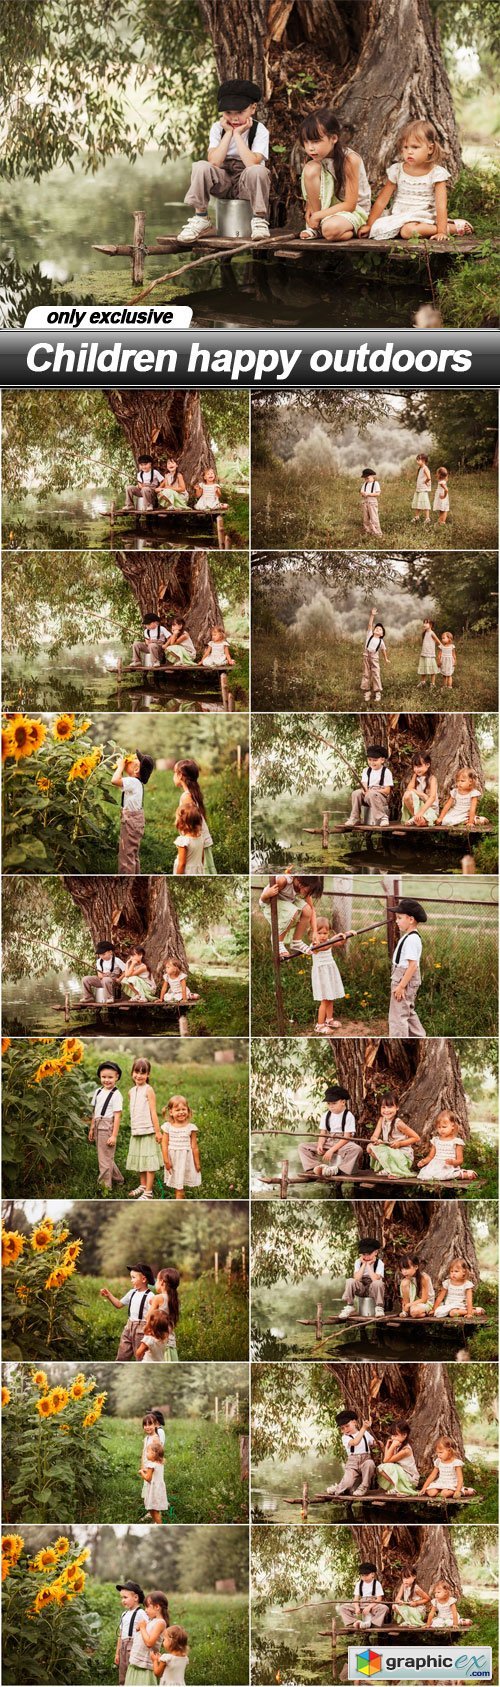 Children happy outdoors - 16 UHQ JPEG